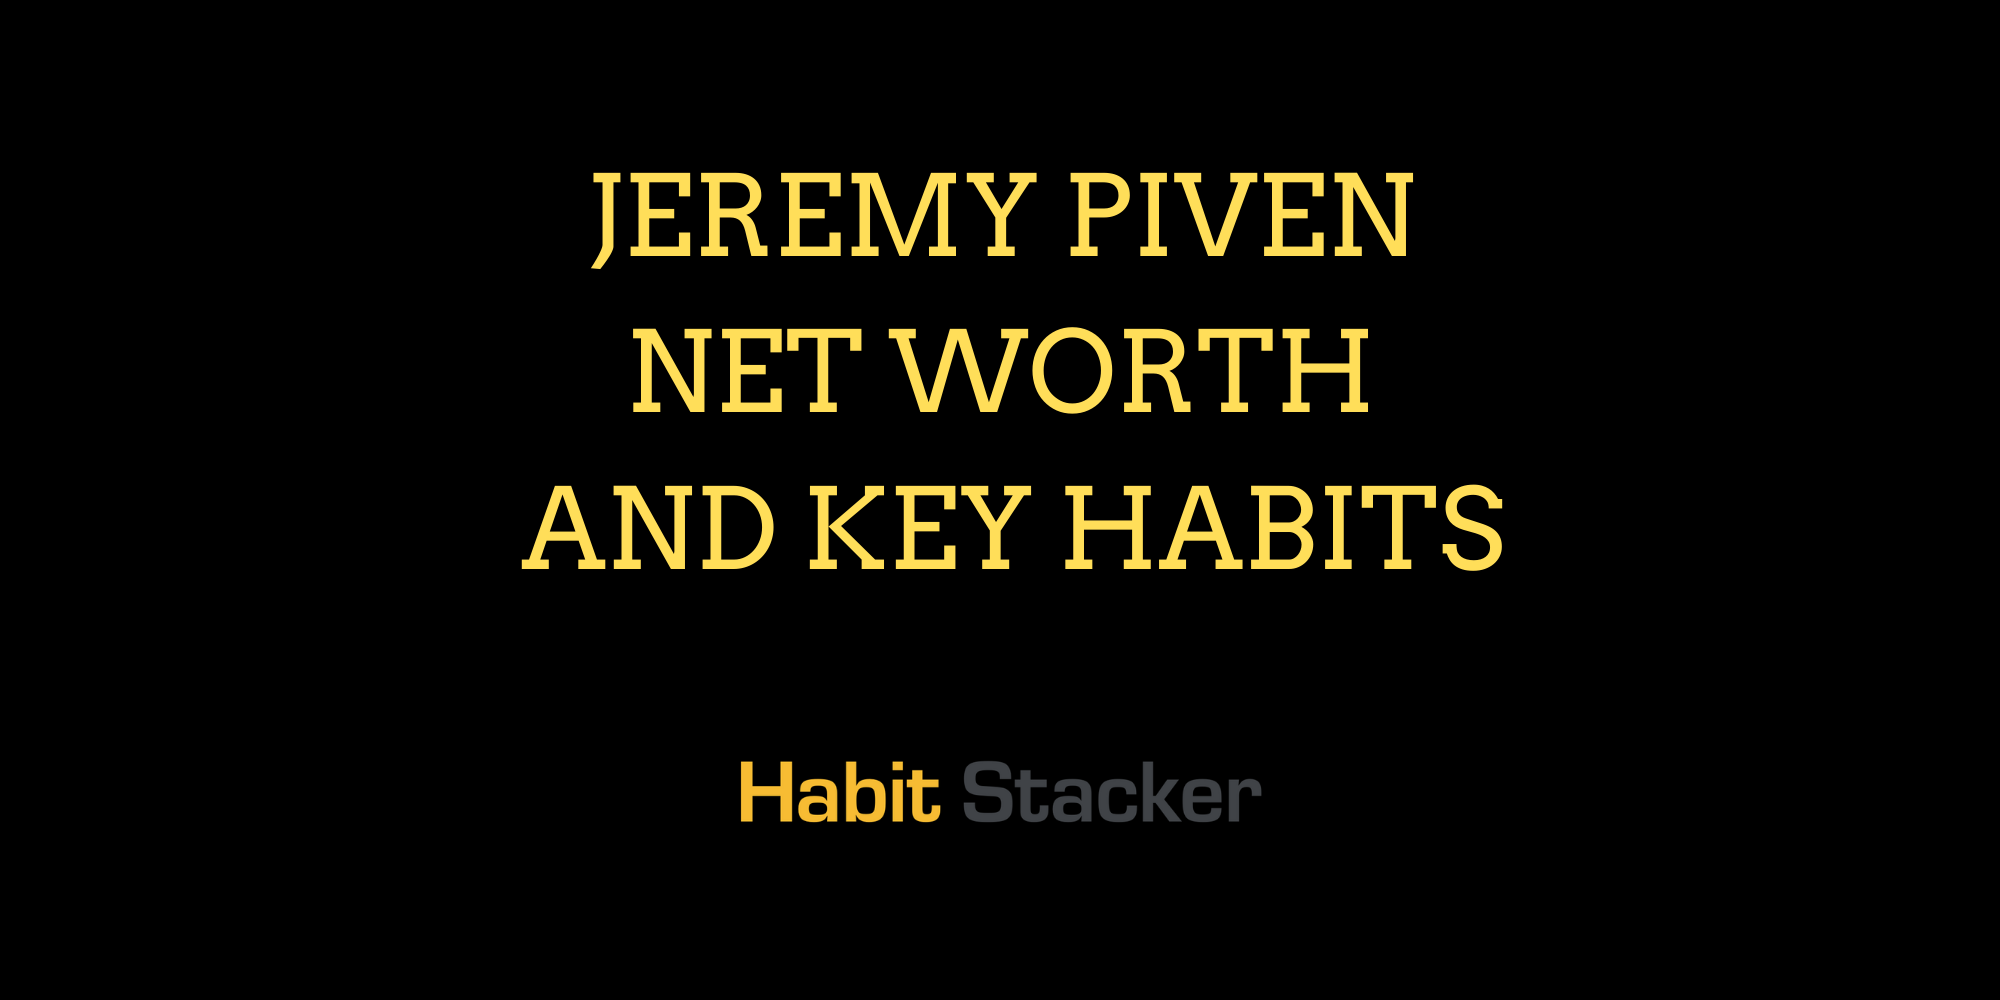 Jeremy Piven Net Worth and Key Habits